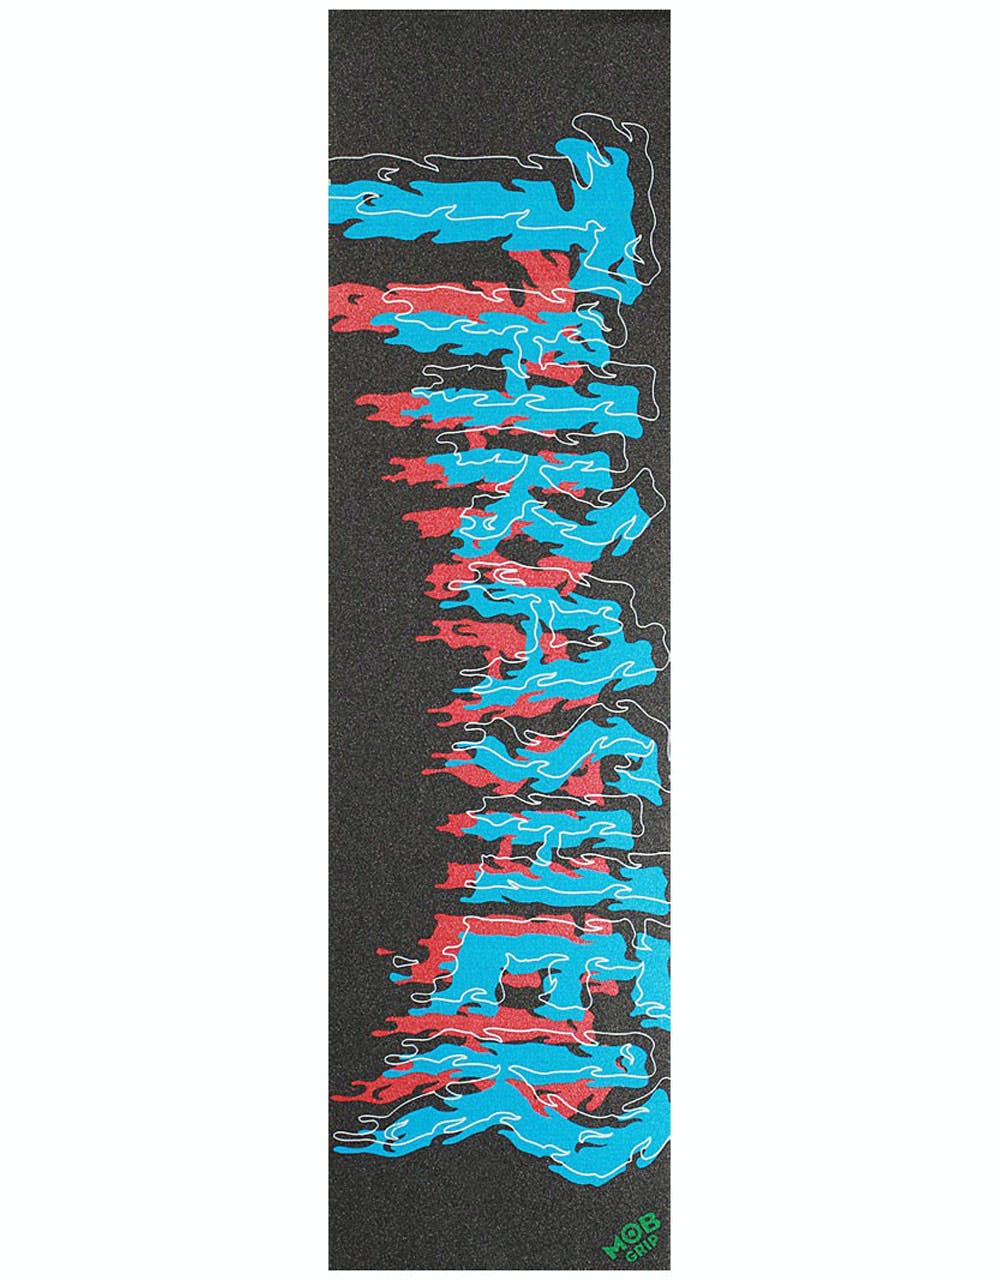 MOB x Thrasher Drips 9" Graphic Grip Tape Sheet